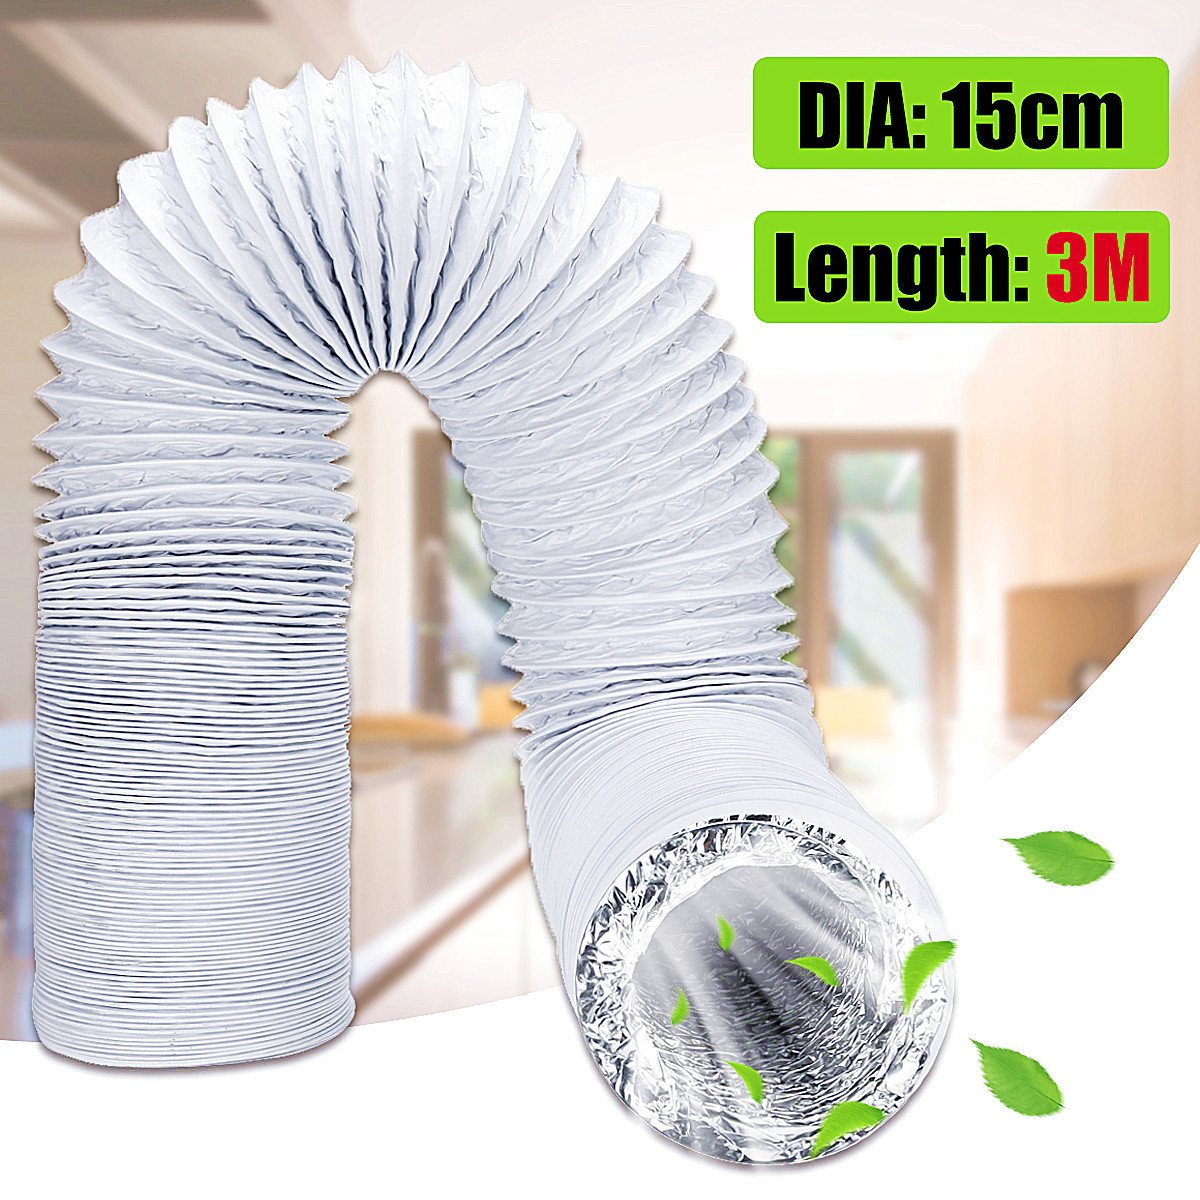 3M-15cm-Dia-Exhaust-Hose-PVC-Flexible-Ducting-Air-Conditioner-Exhaust-Hose-Replacement-Duct-Outlet-1336411-1